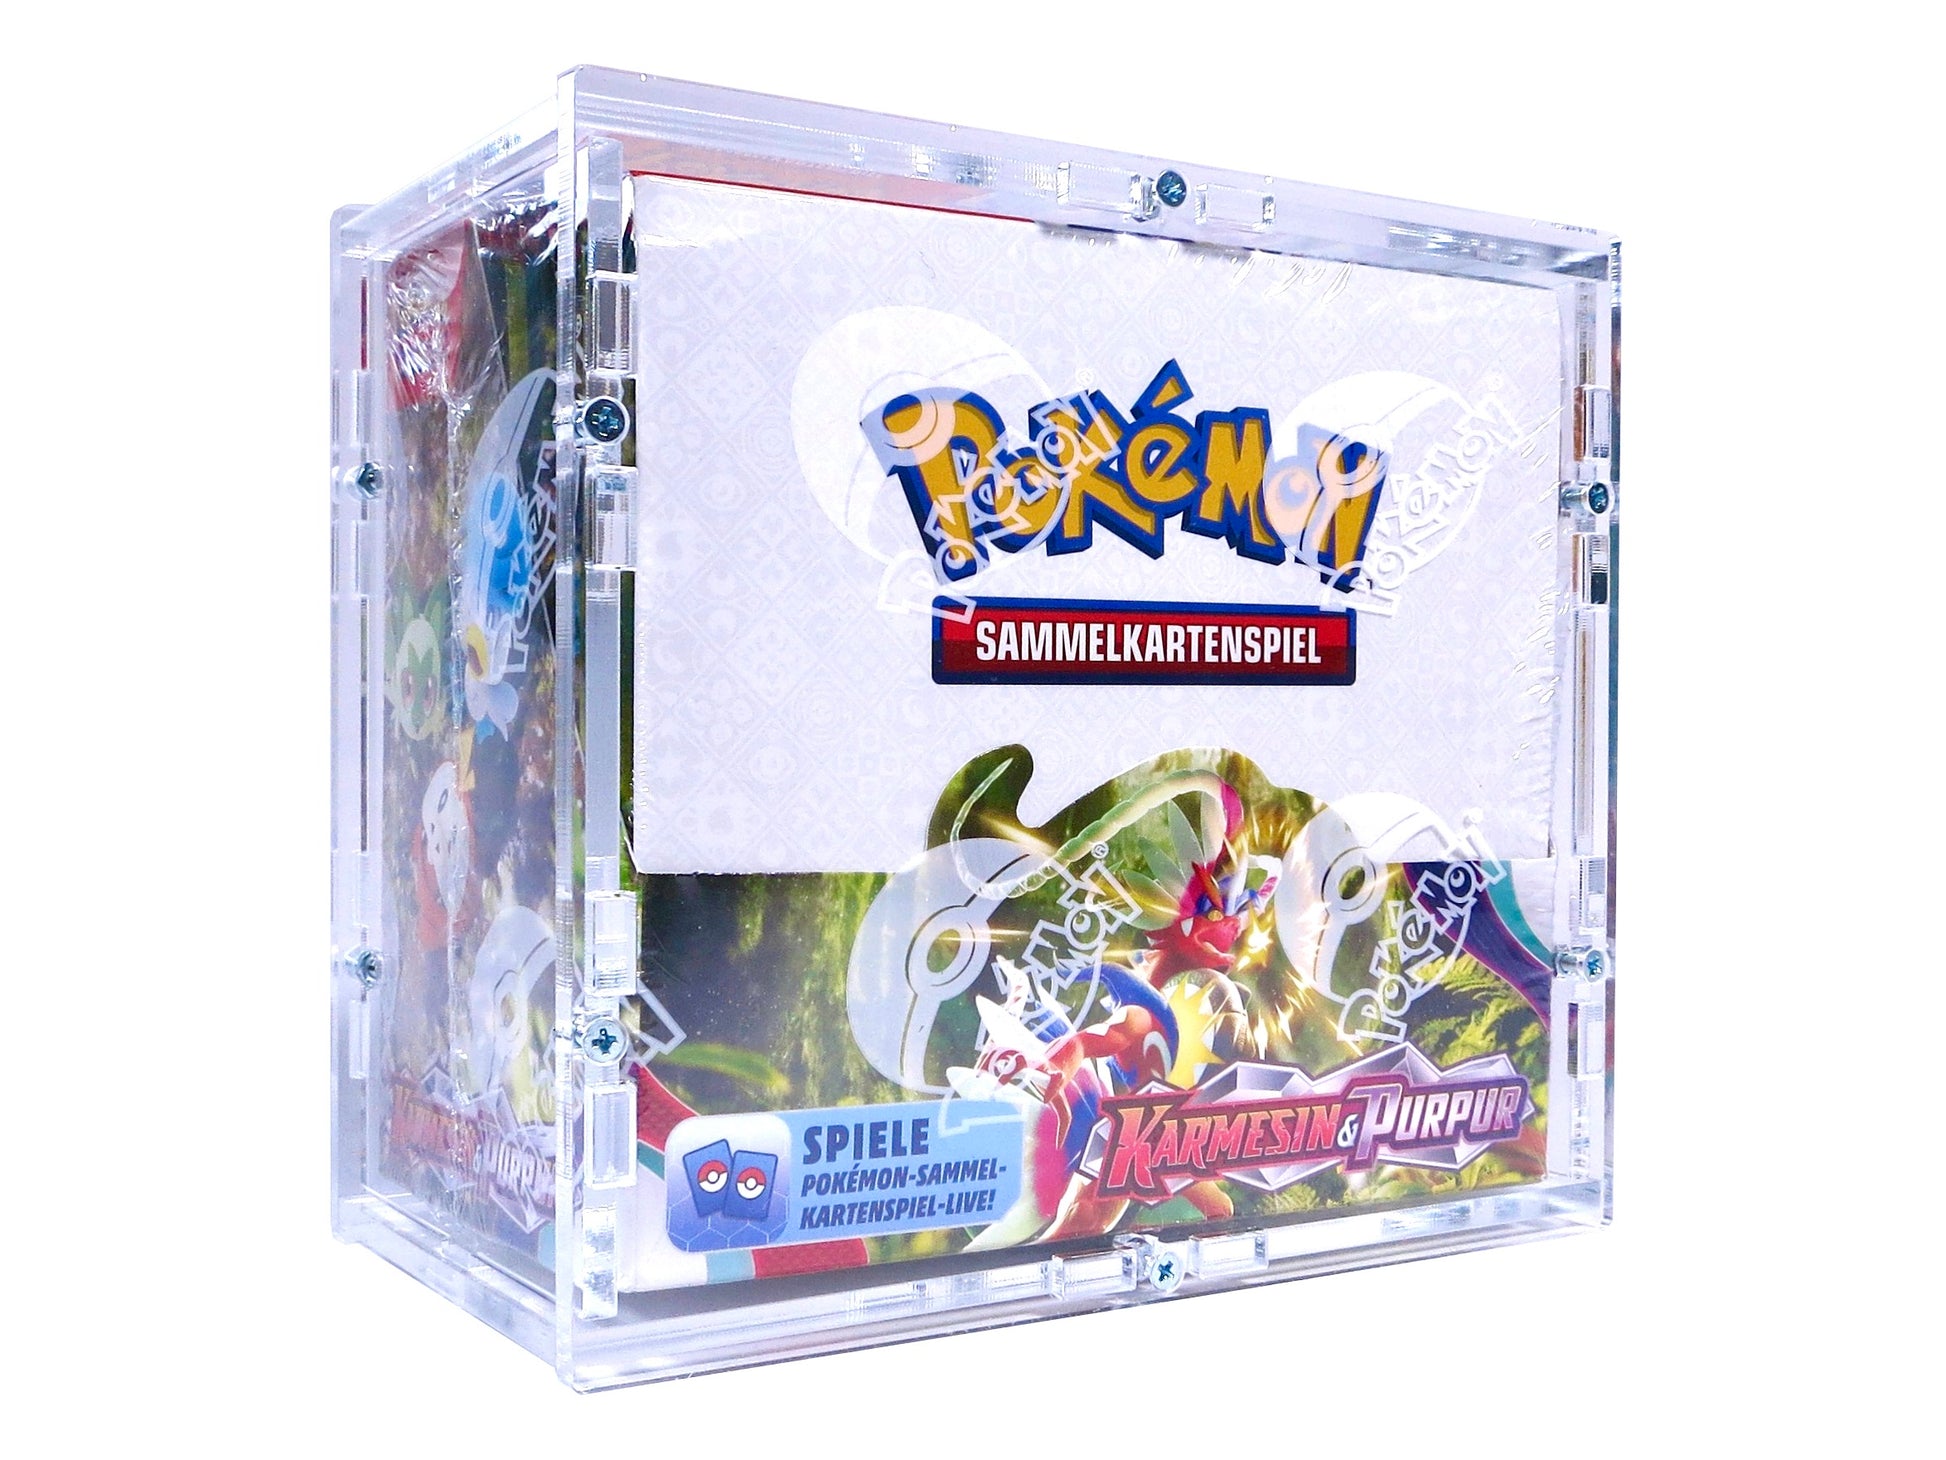 Acrylic Booster Box Display for Pokémon